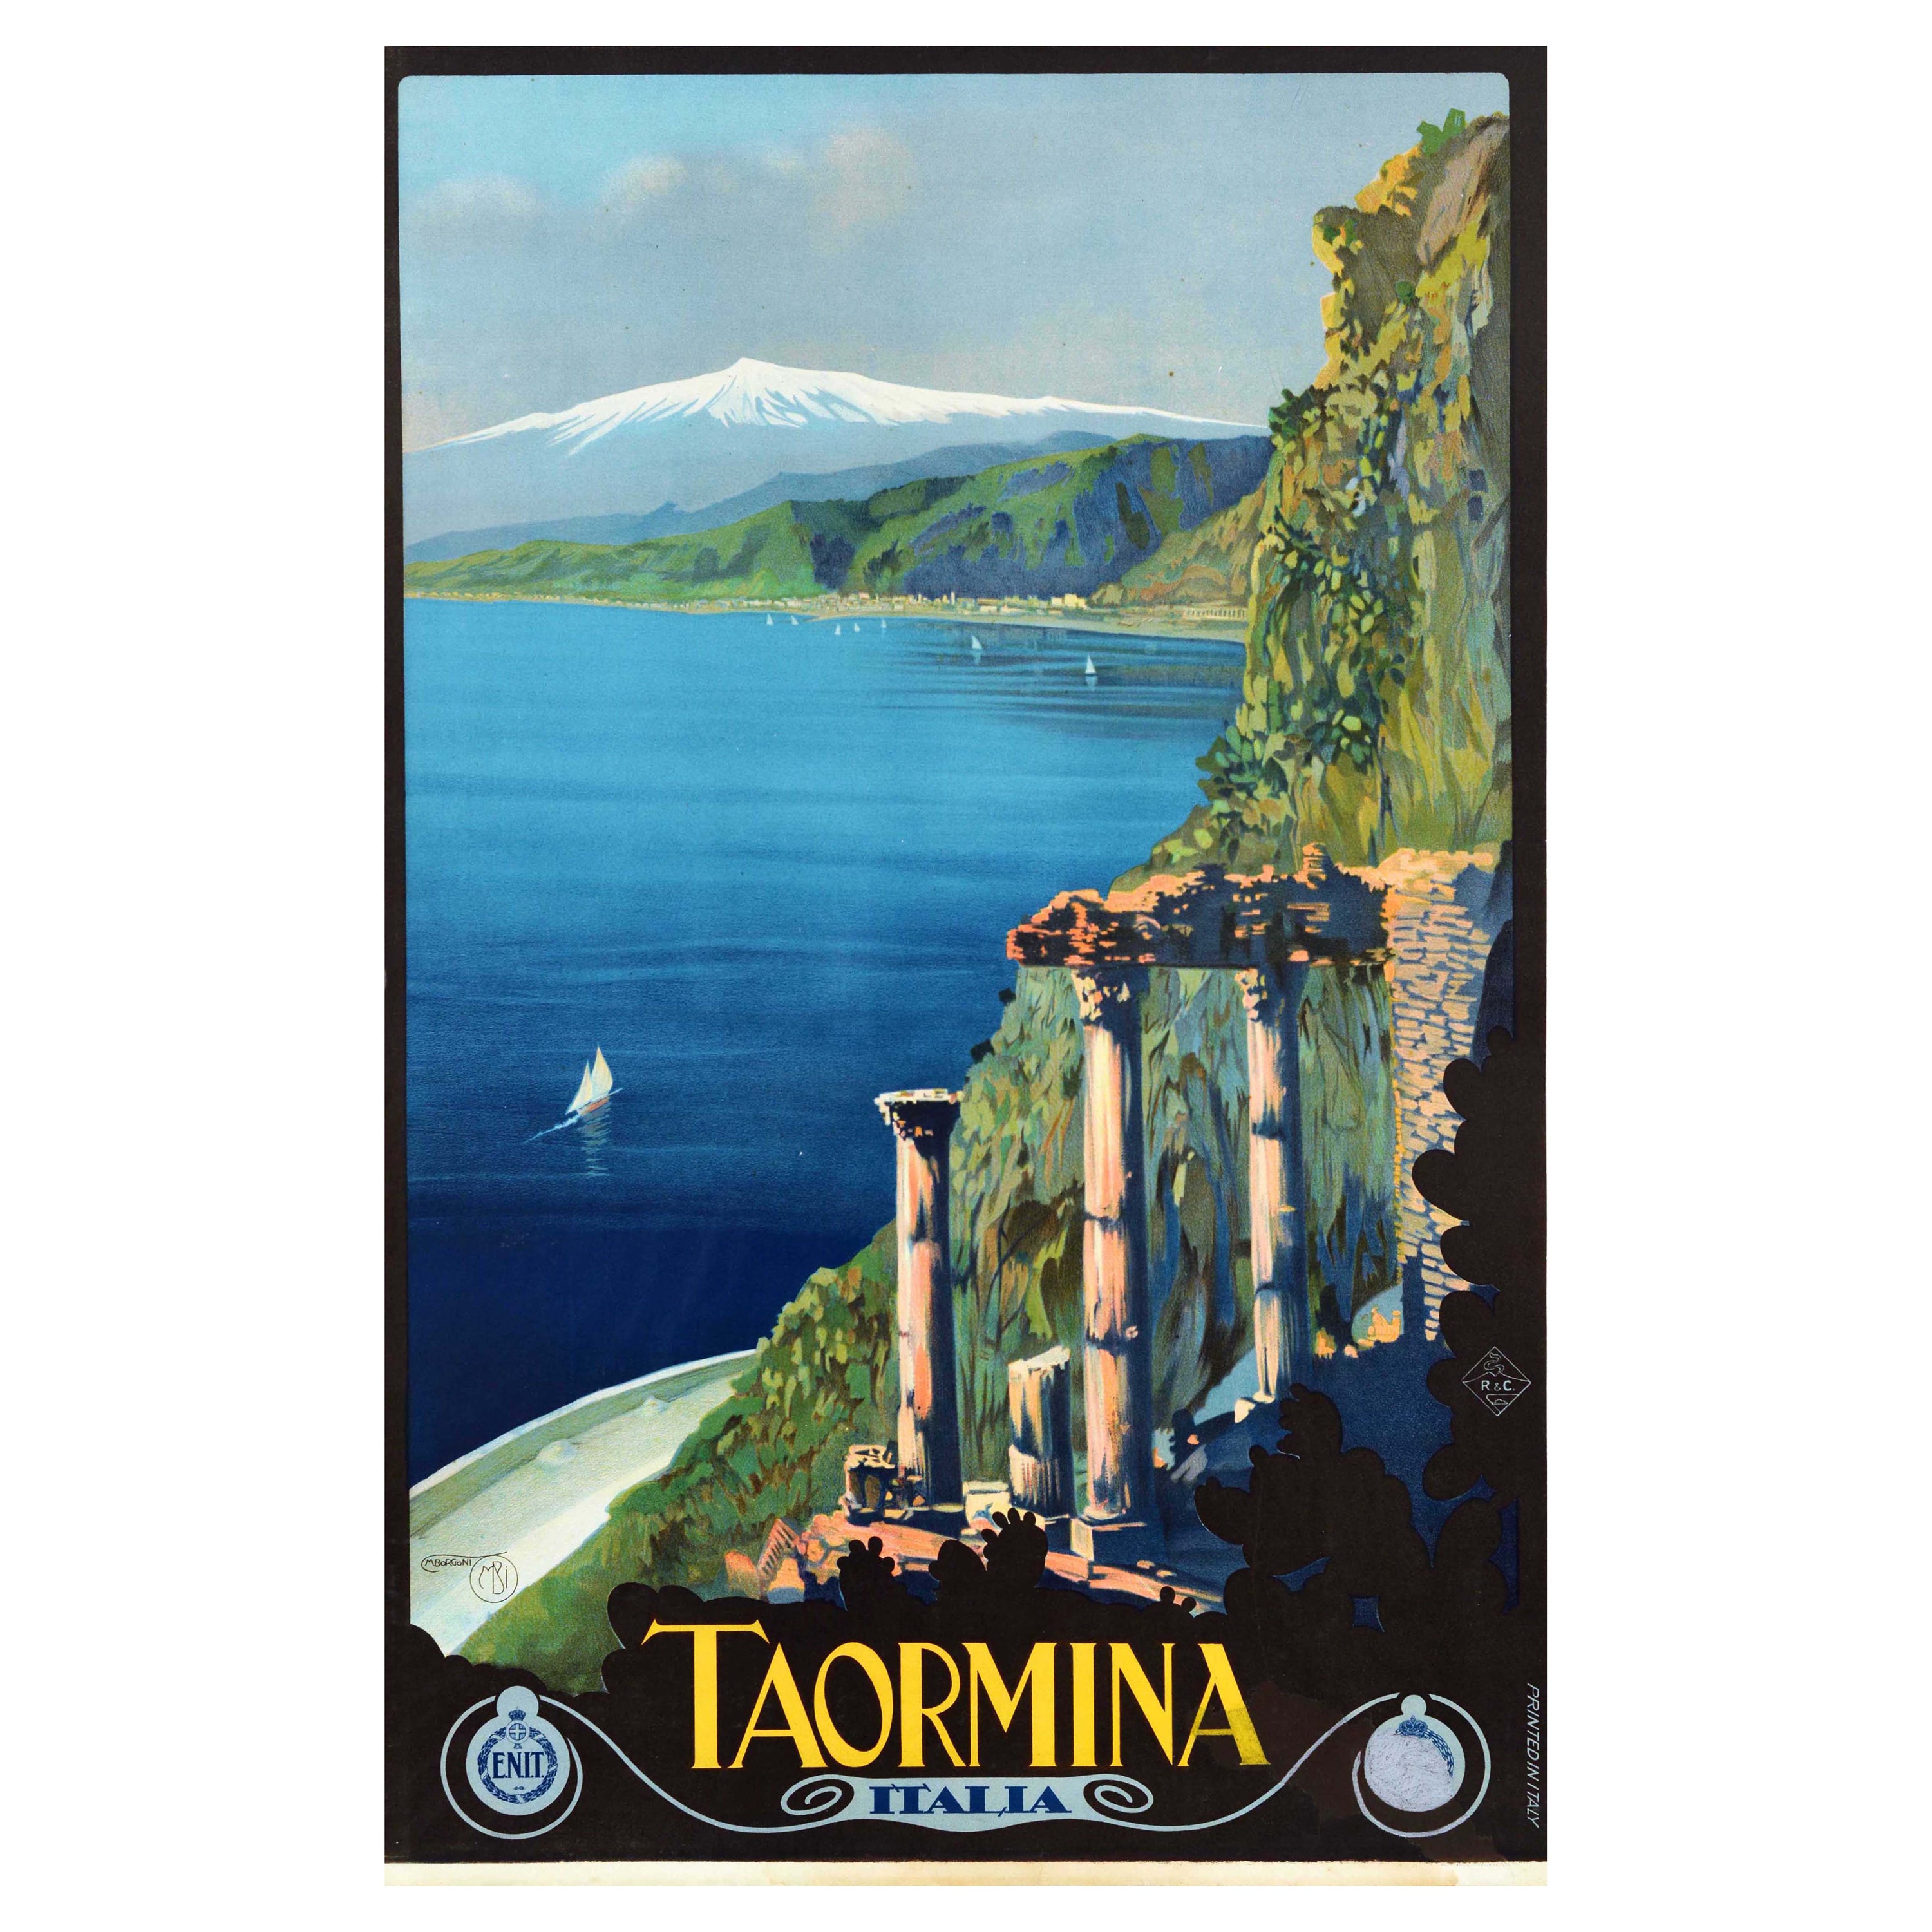 Original Vintage Travel Poster Taormina Sicily ENIT Italy Borgoni Mount Etna Art For Sale